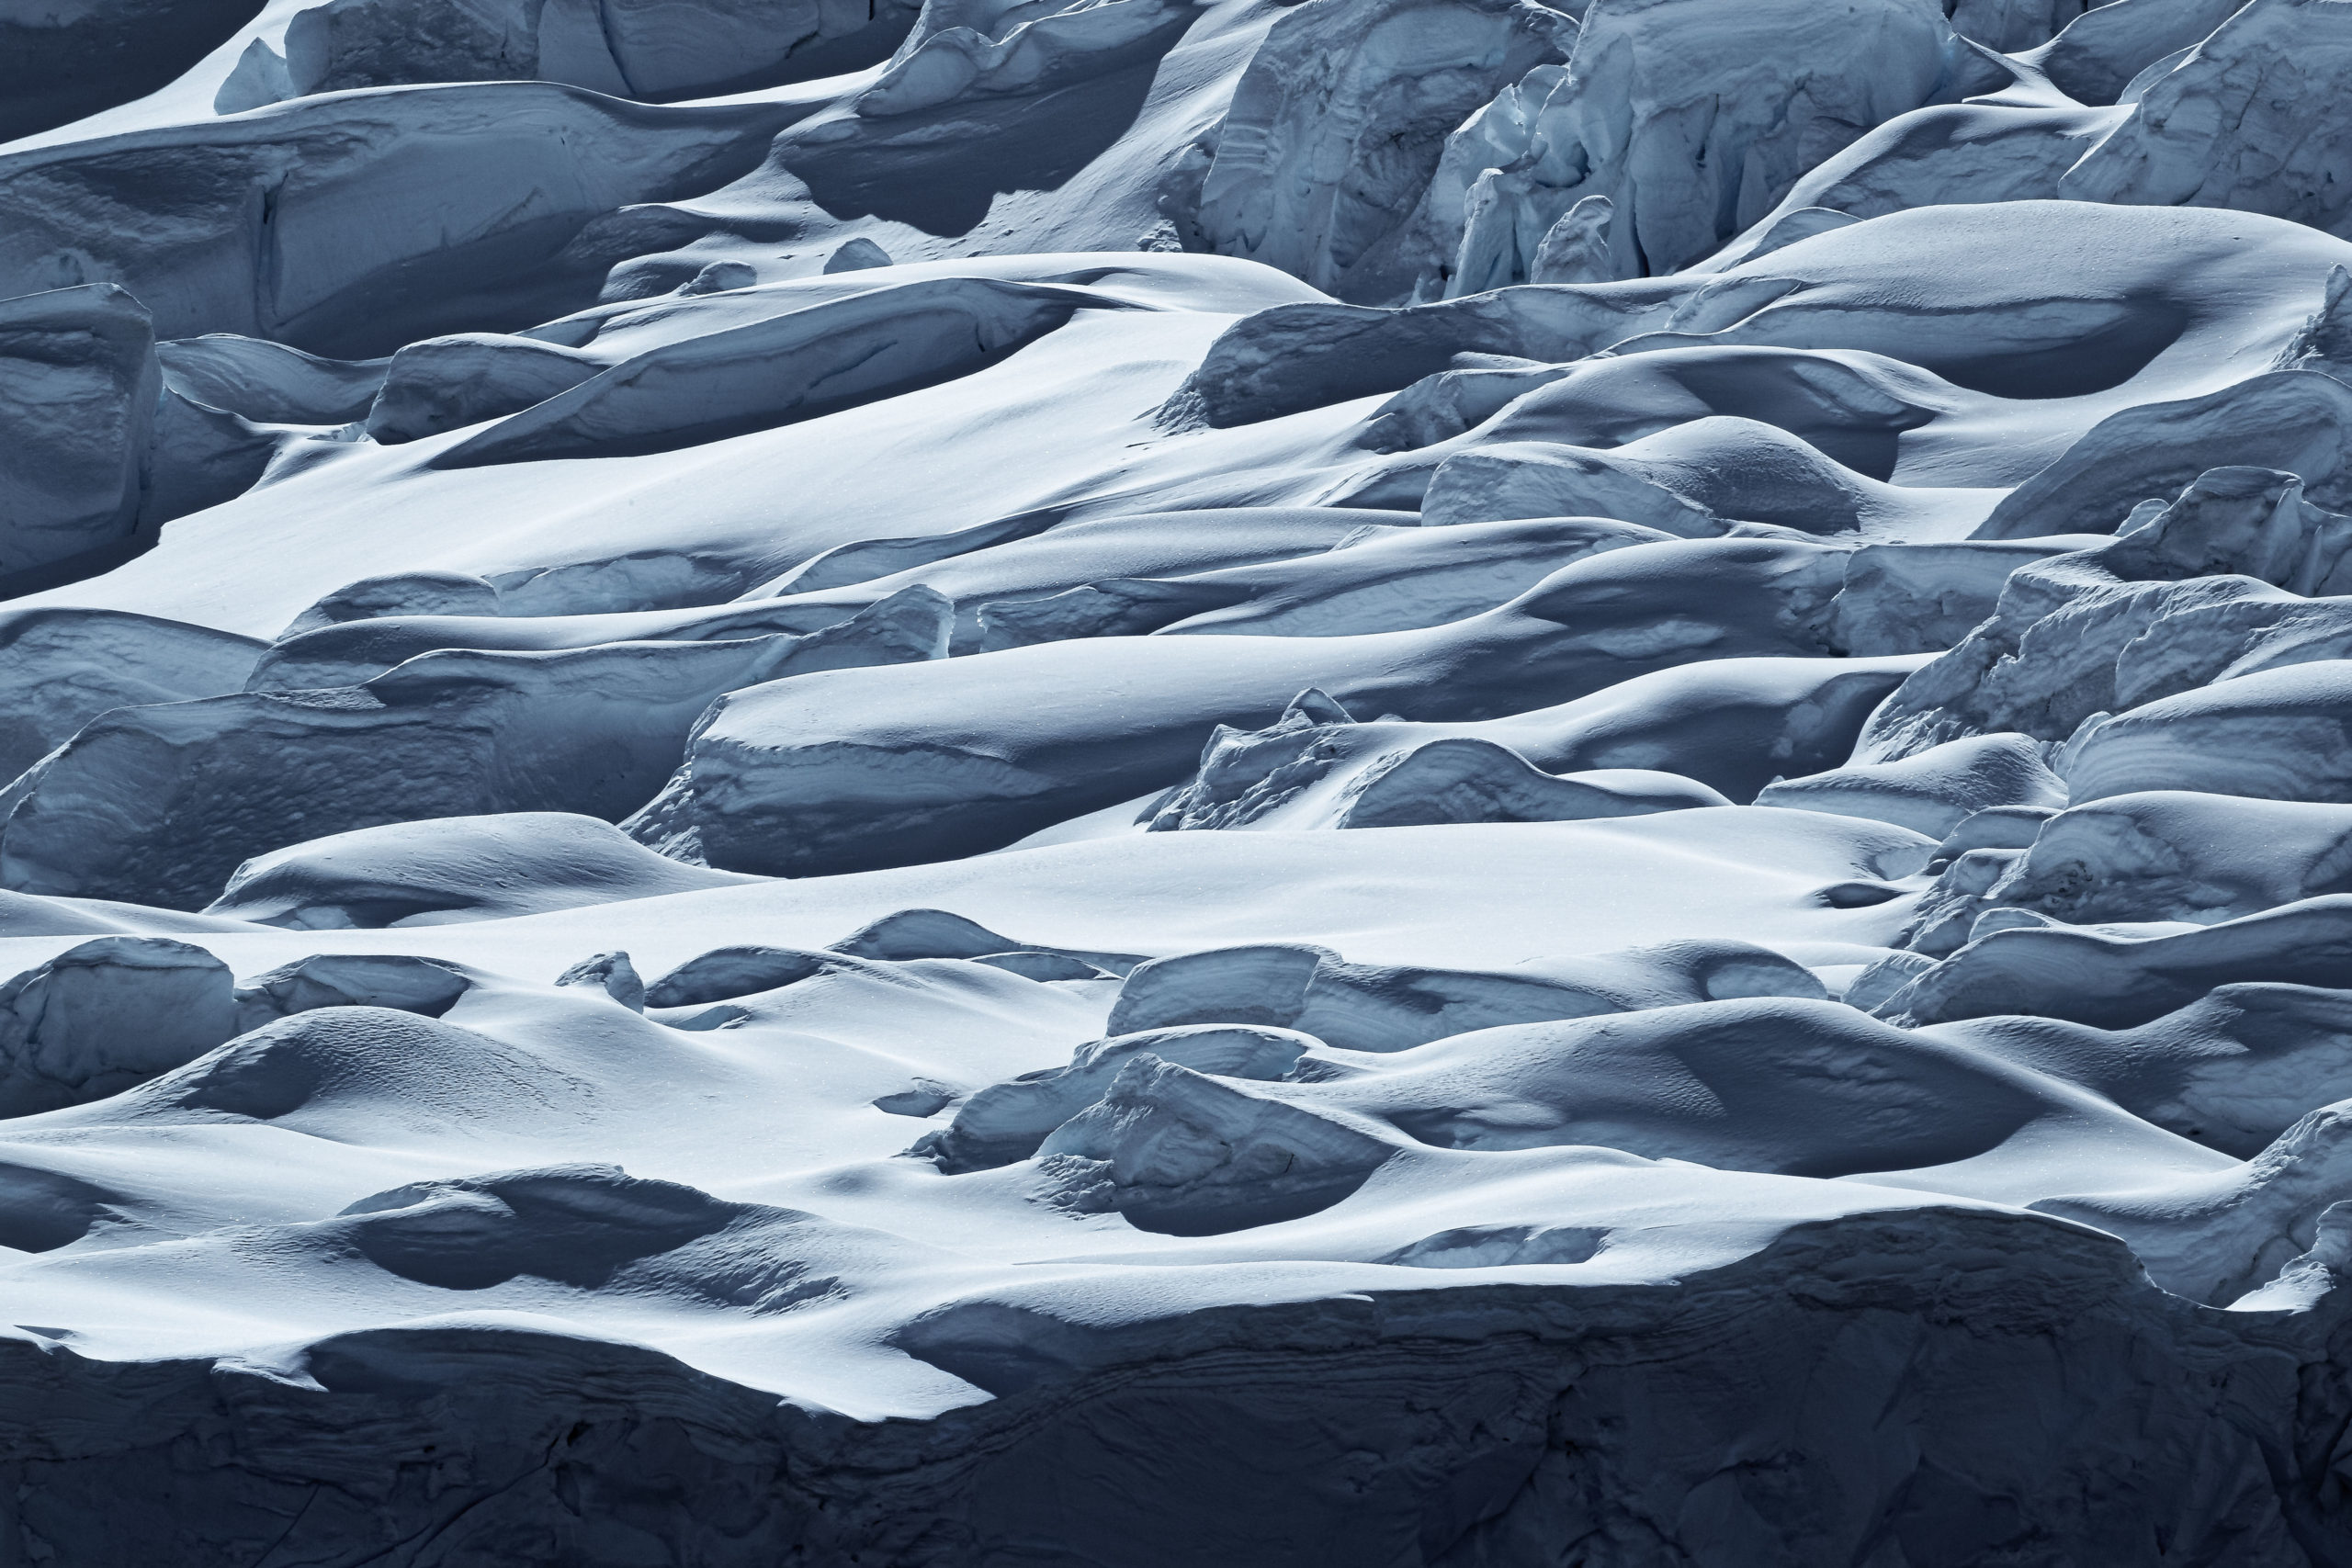 Abstract landscape photography of a glacier in Neko, Antarctica